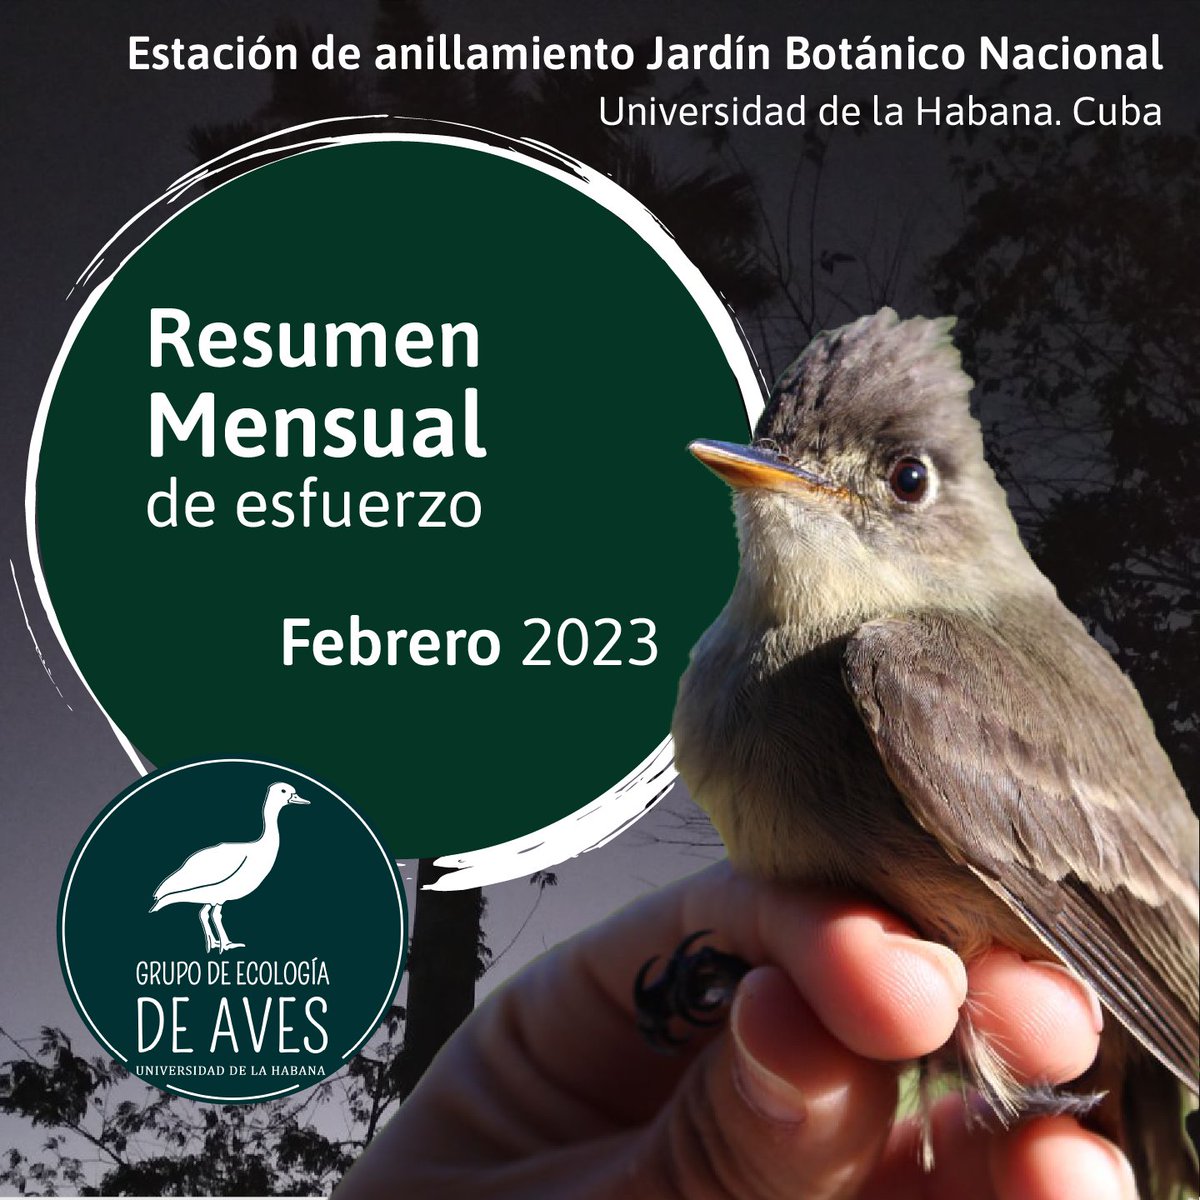 Bird banding at the National Botanical Garden, Cuba
February 2023   #birdbanding #caribbeanbirdbandingnetwork #birdscaribbean